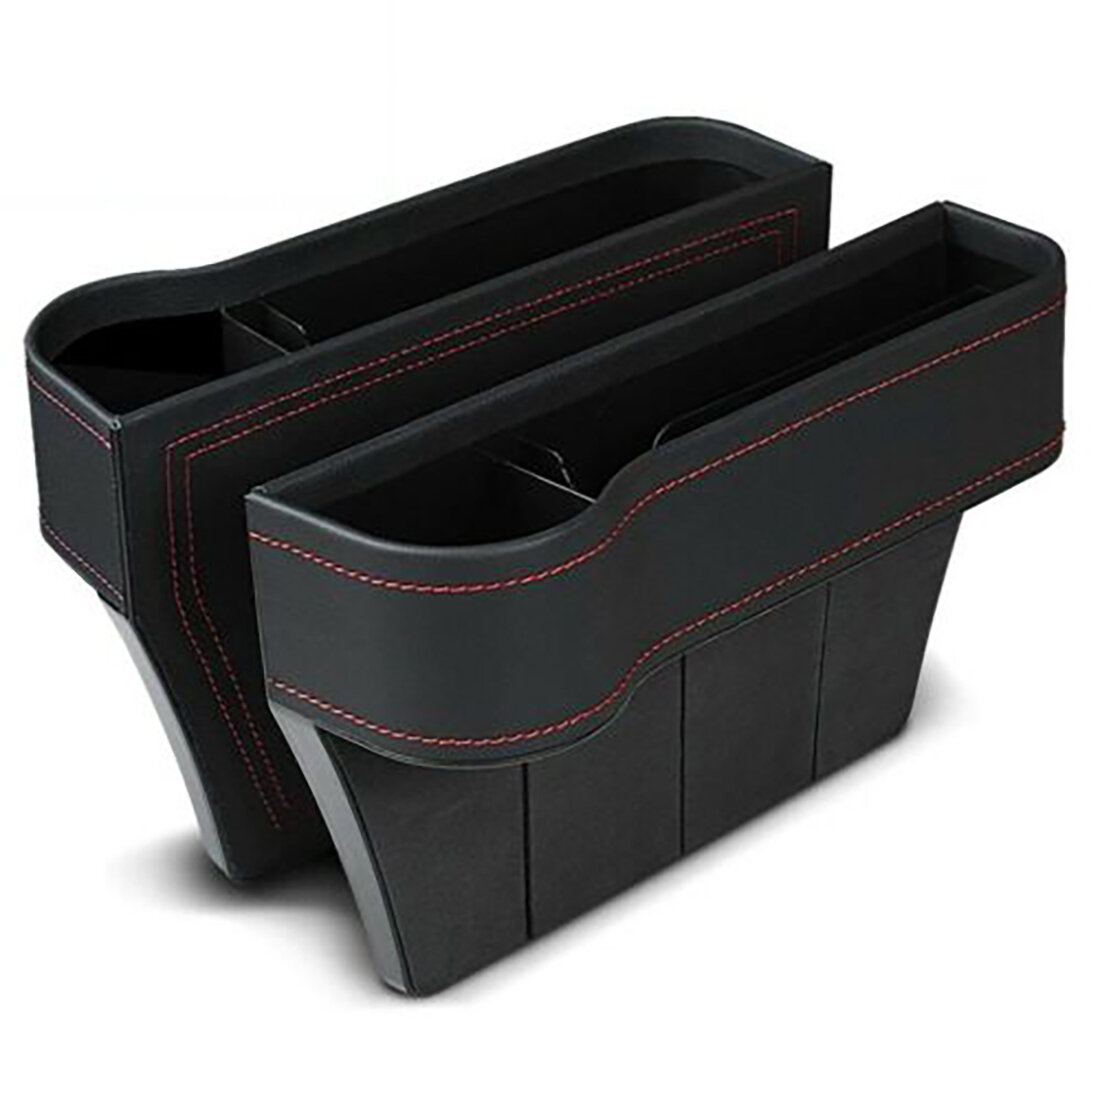 PU Leather Car Storage Bag Pocket Phone Holder for Seat Back Center Console  Door